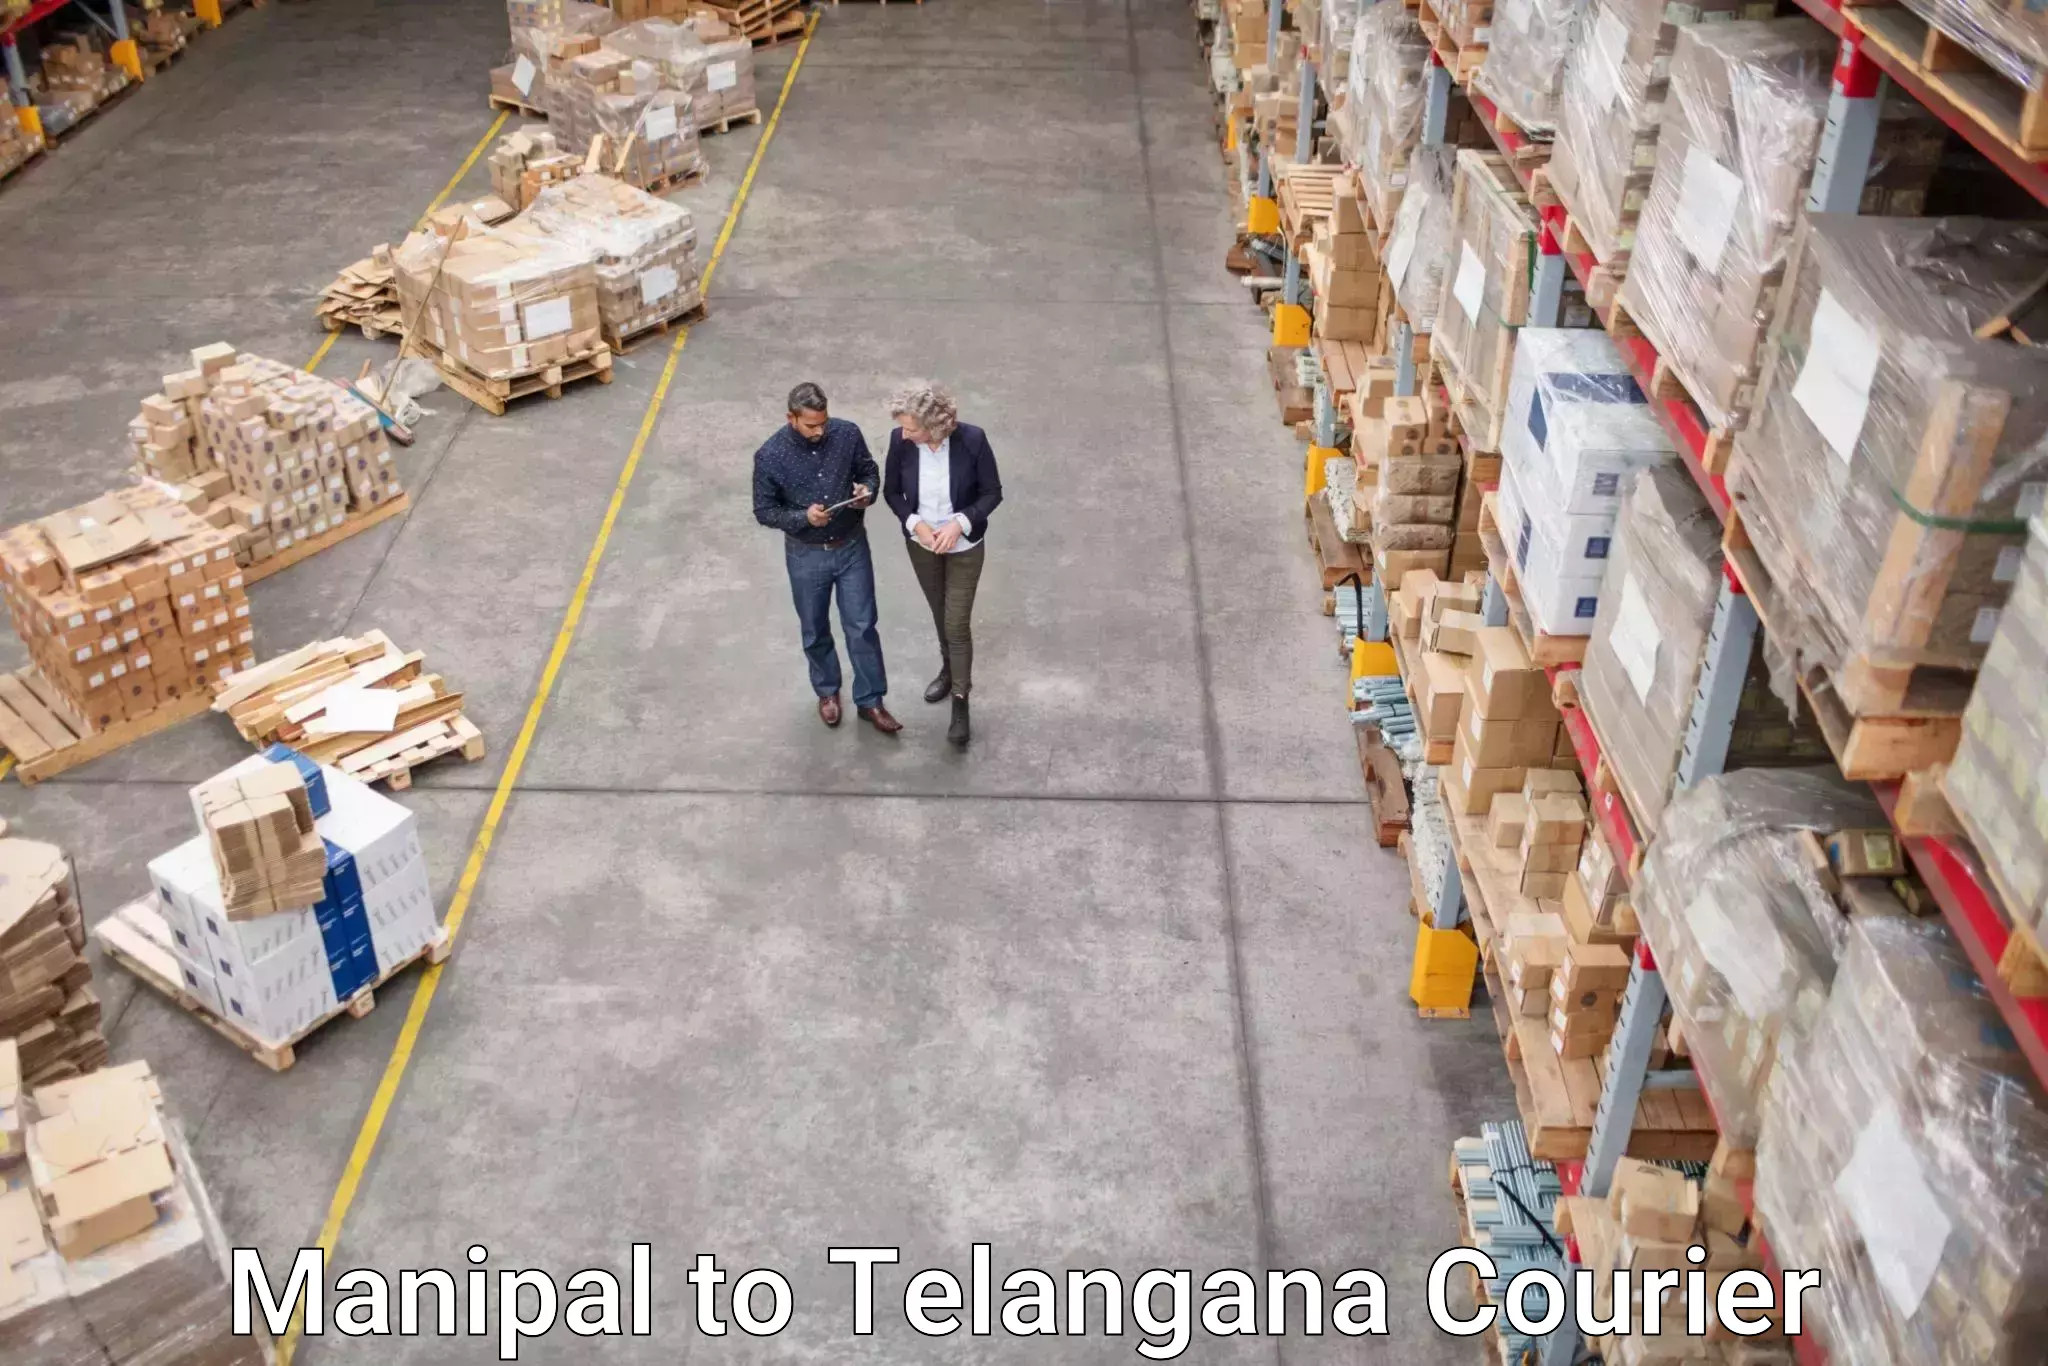 Logistics service provider Manipal to Telangana